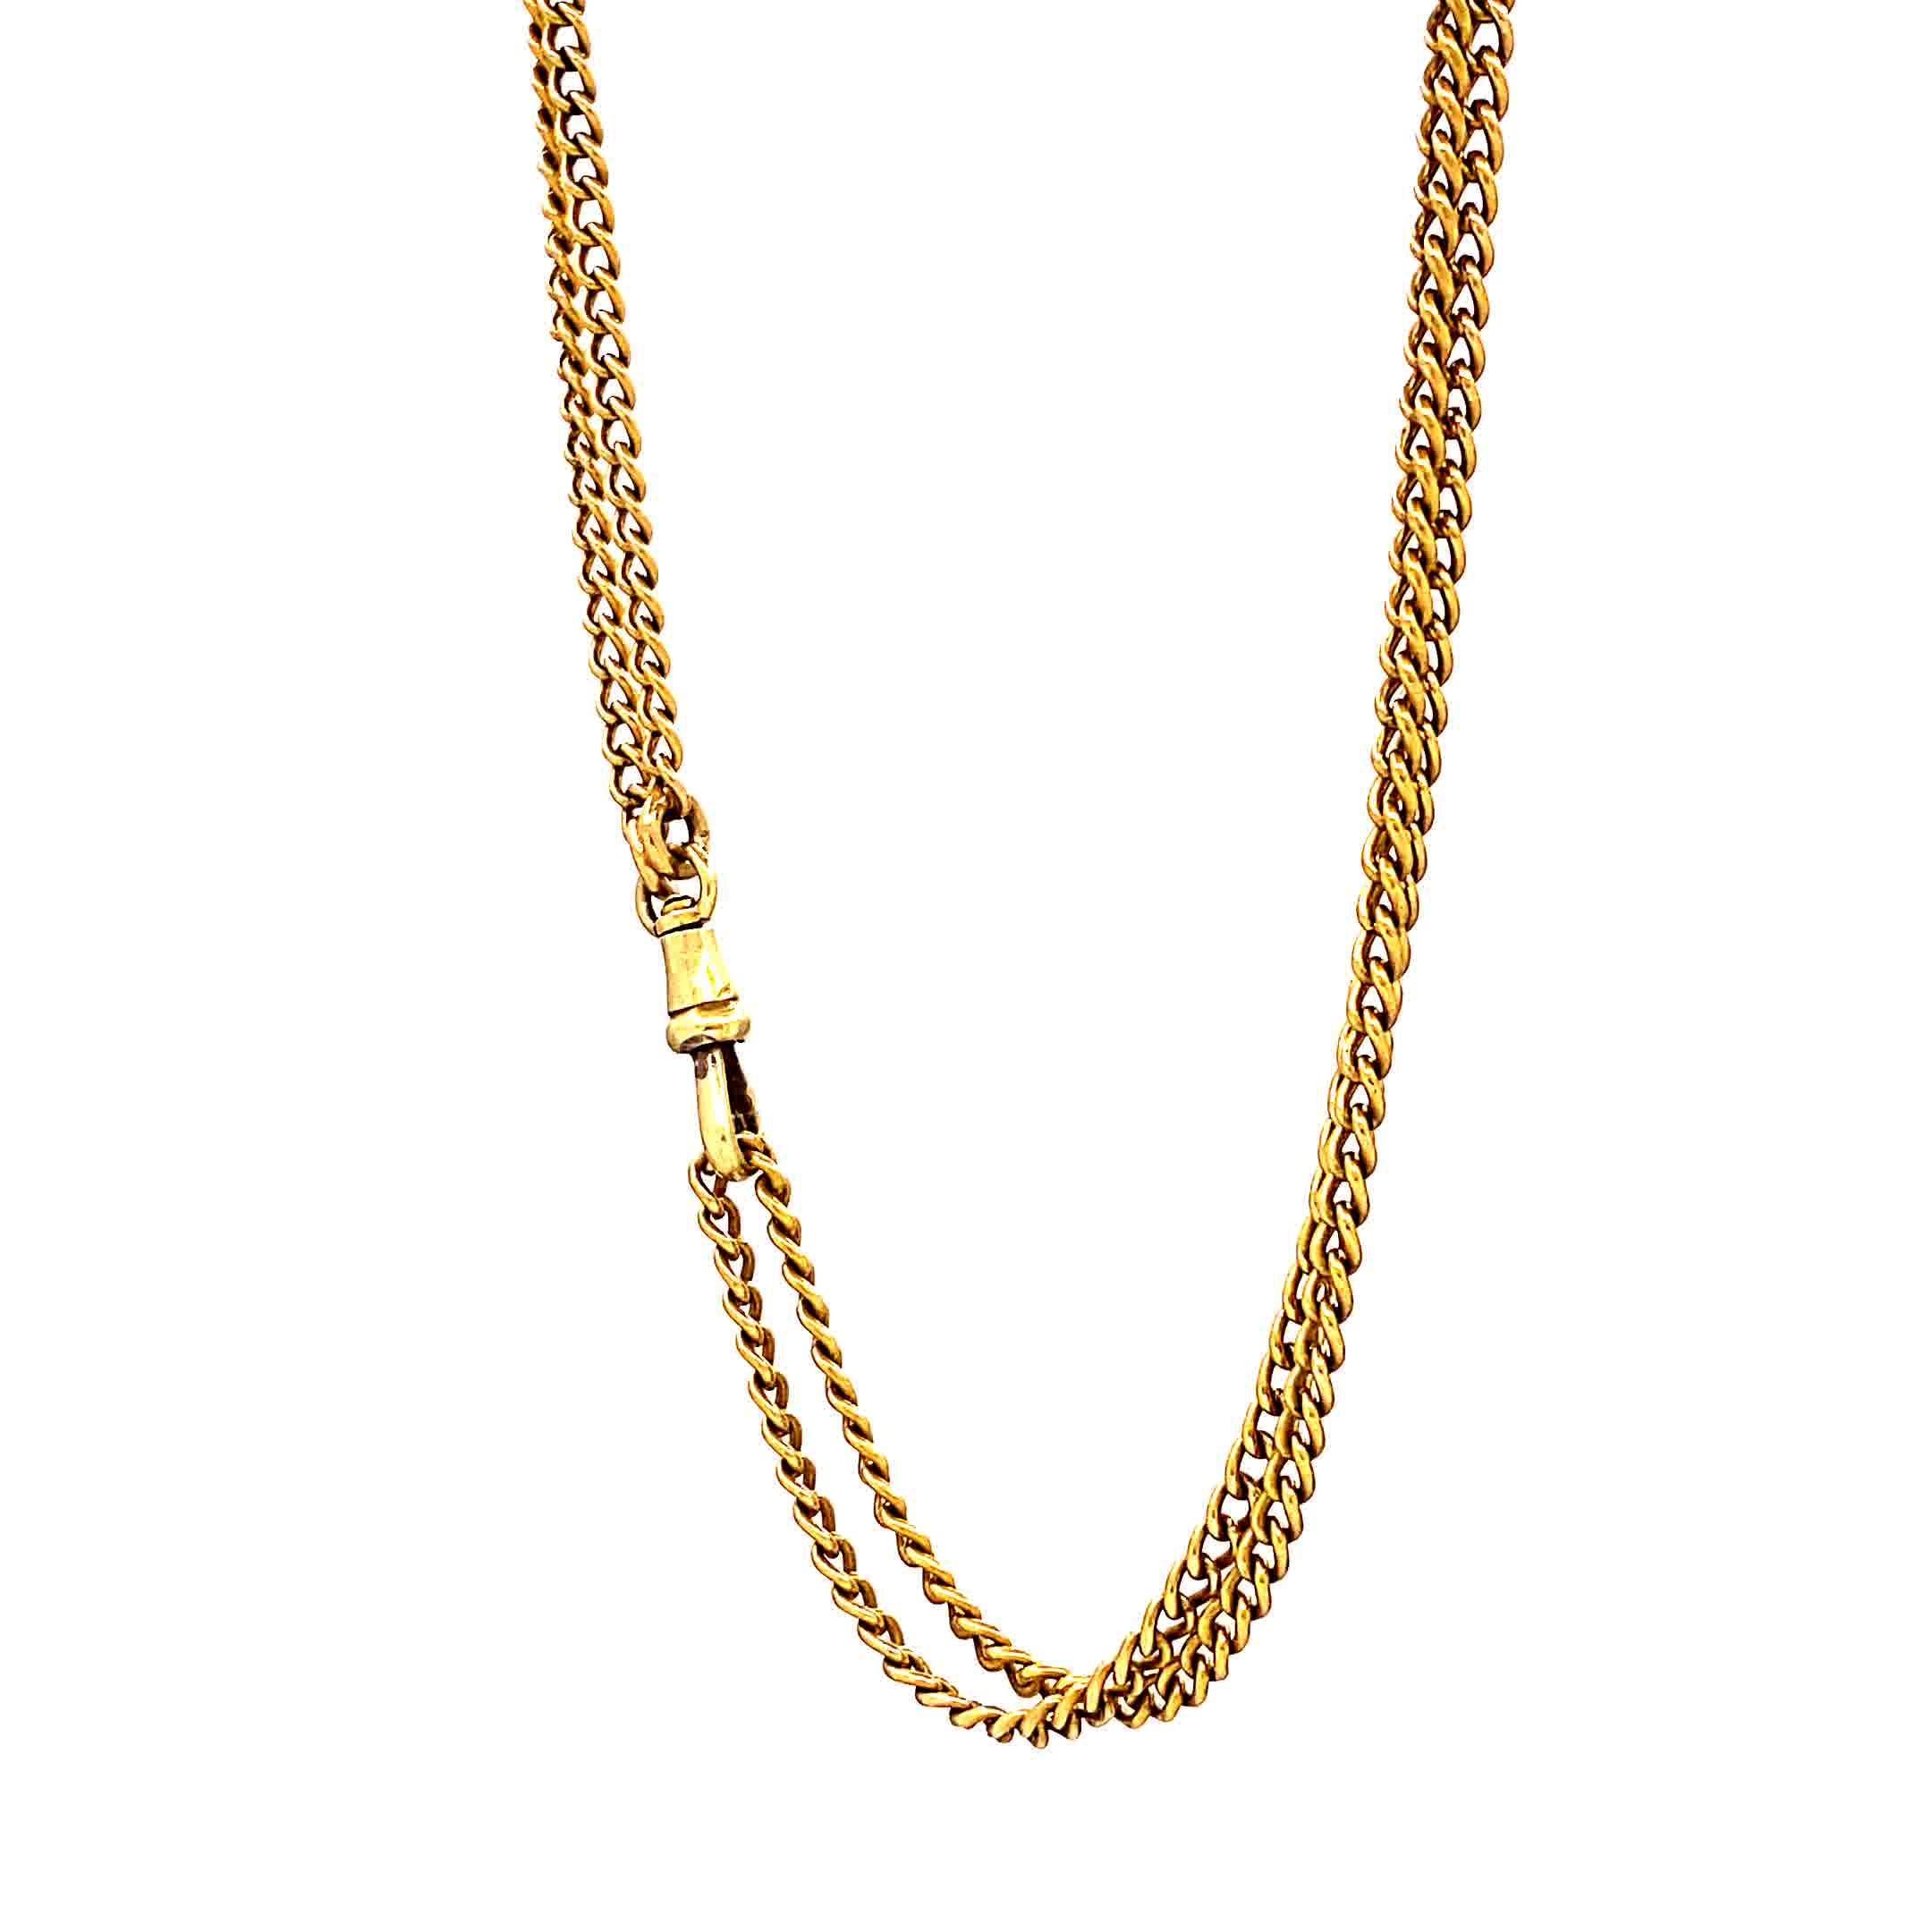 Women's or Men's Antique French 18 Karat Gold Long Guard Chain